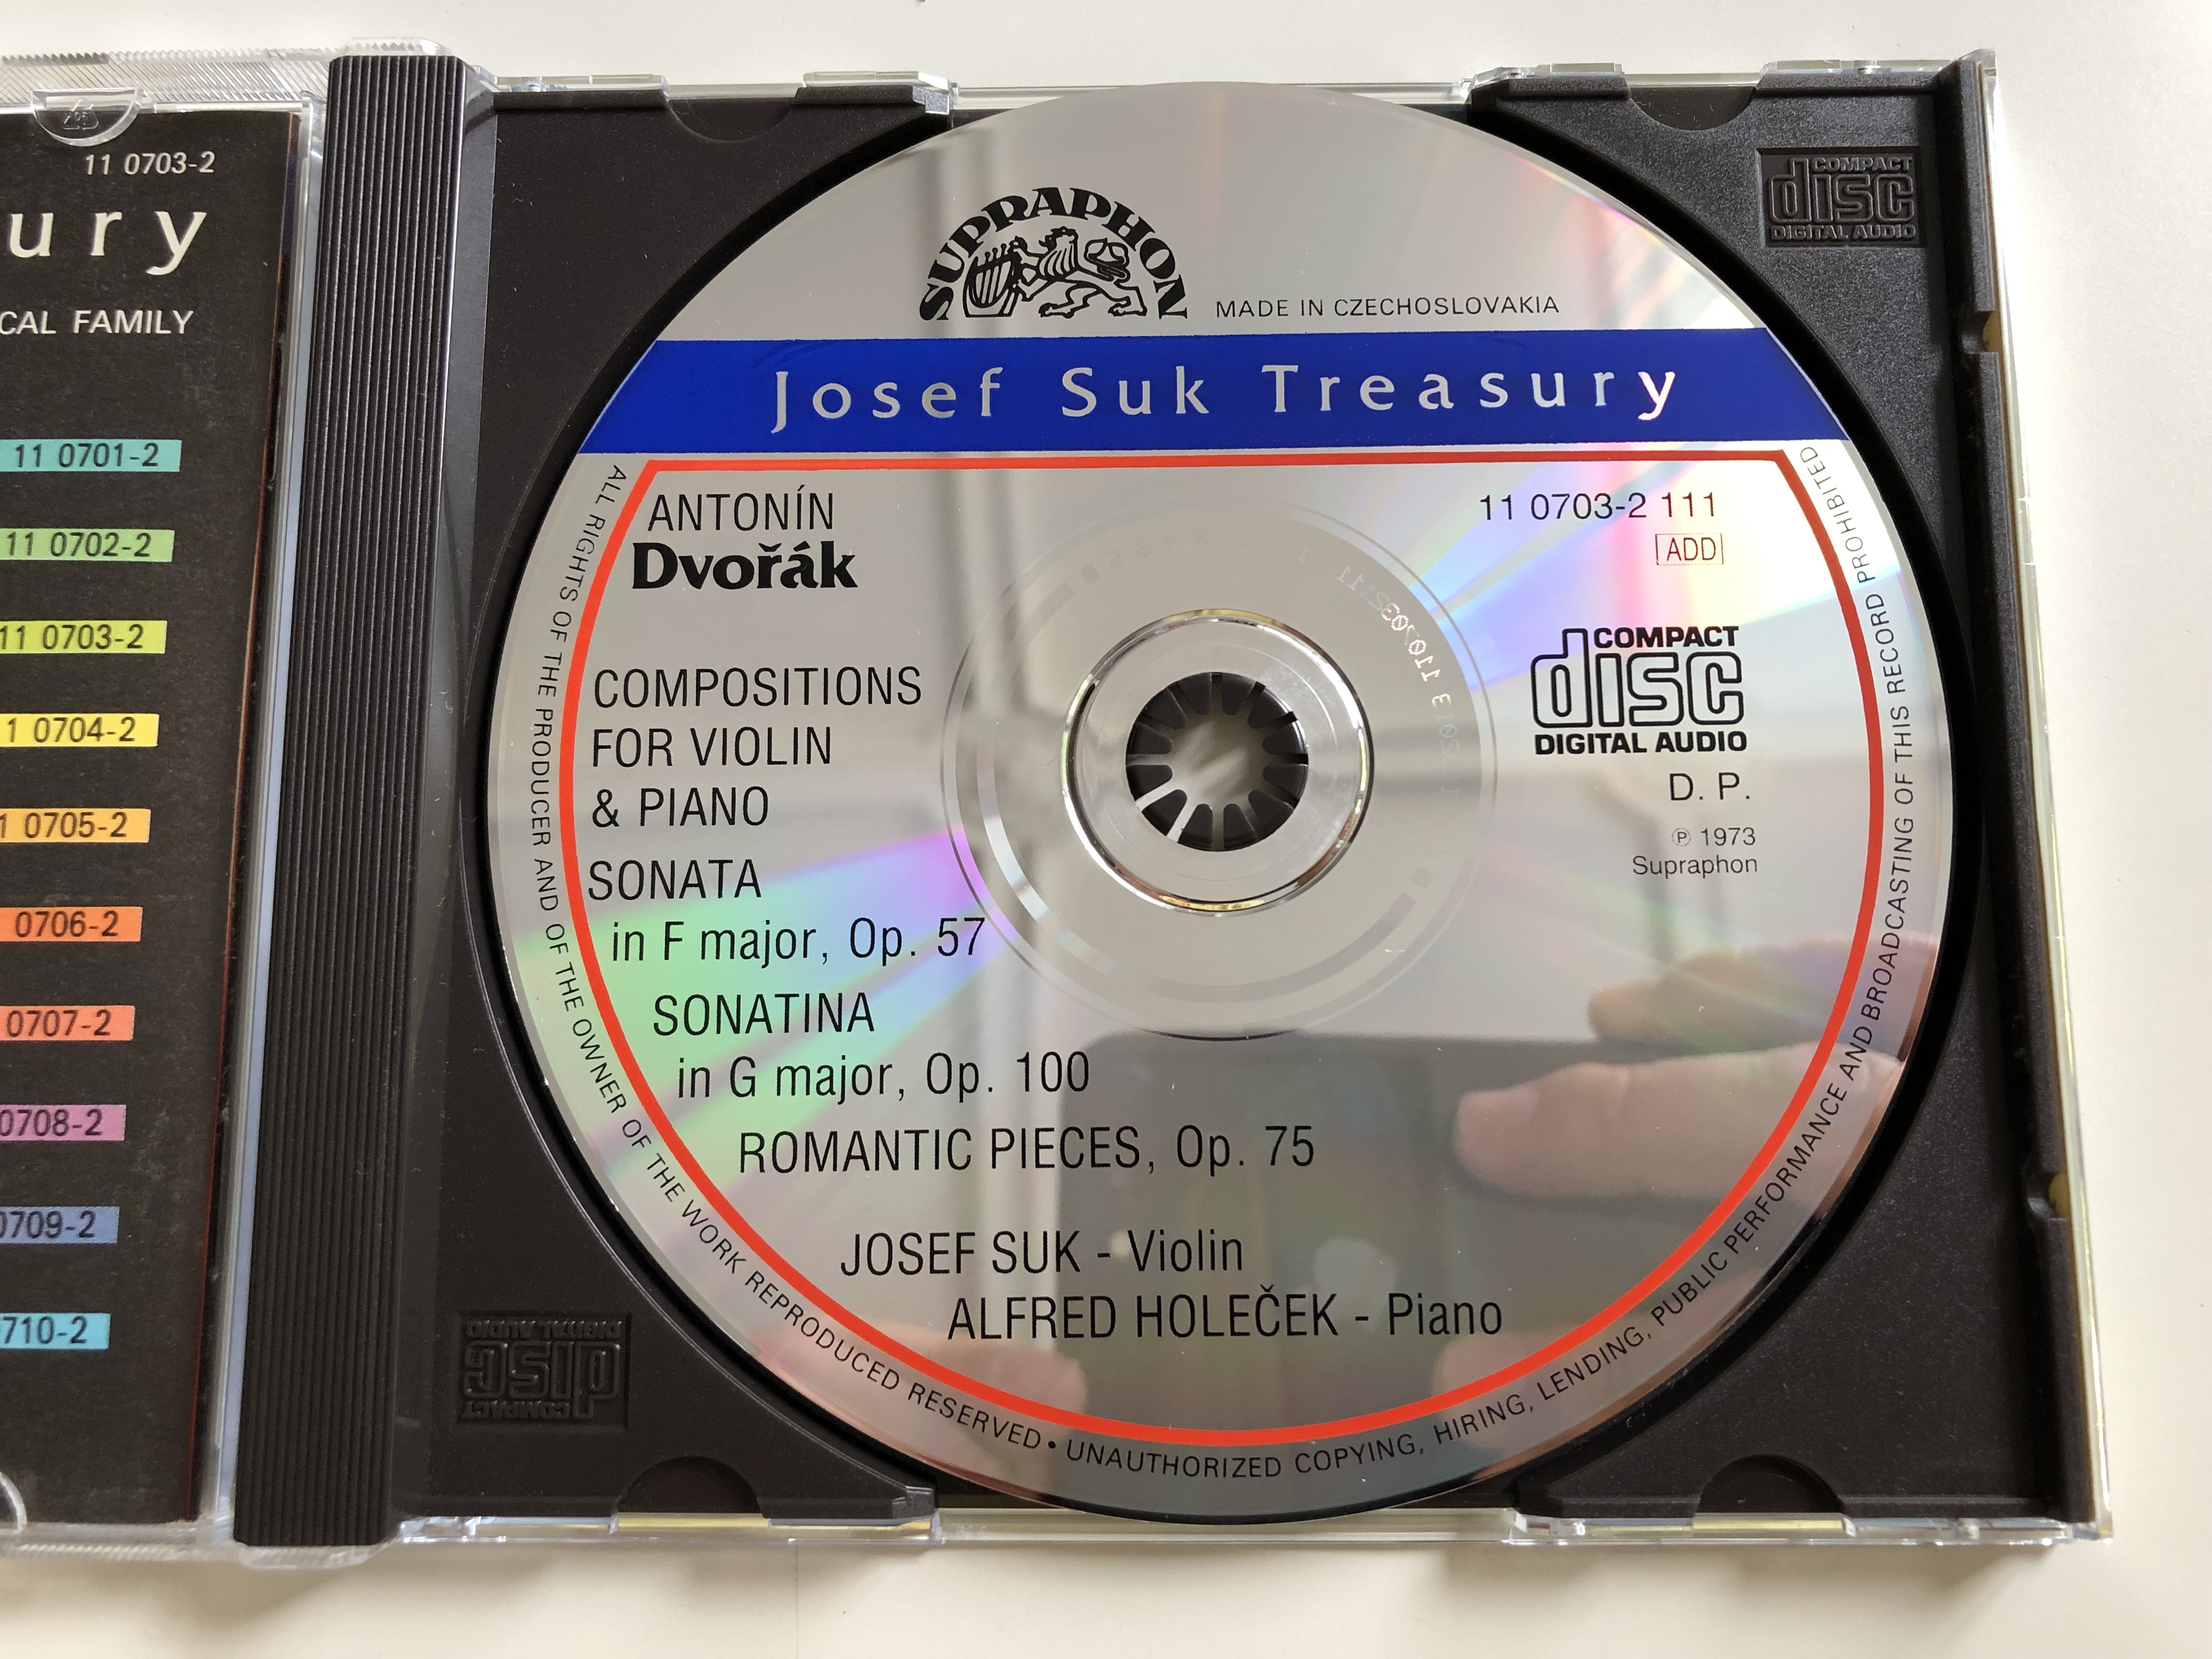 josef-suk-treasury-dvor-k-sonata-sonatina-romantic-pieces-josef-suk-violin-alfred-hole-ek-piano-supraphon-audio-cd-1989-6-.jpg